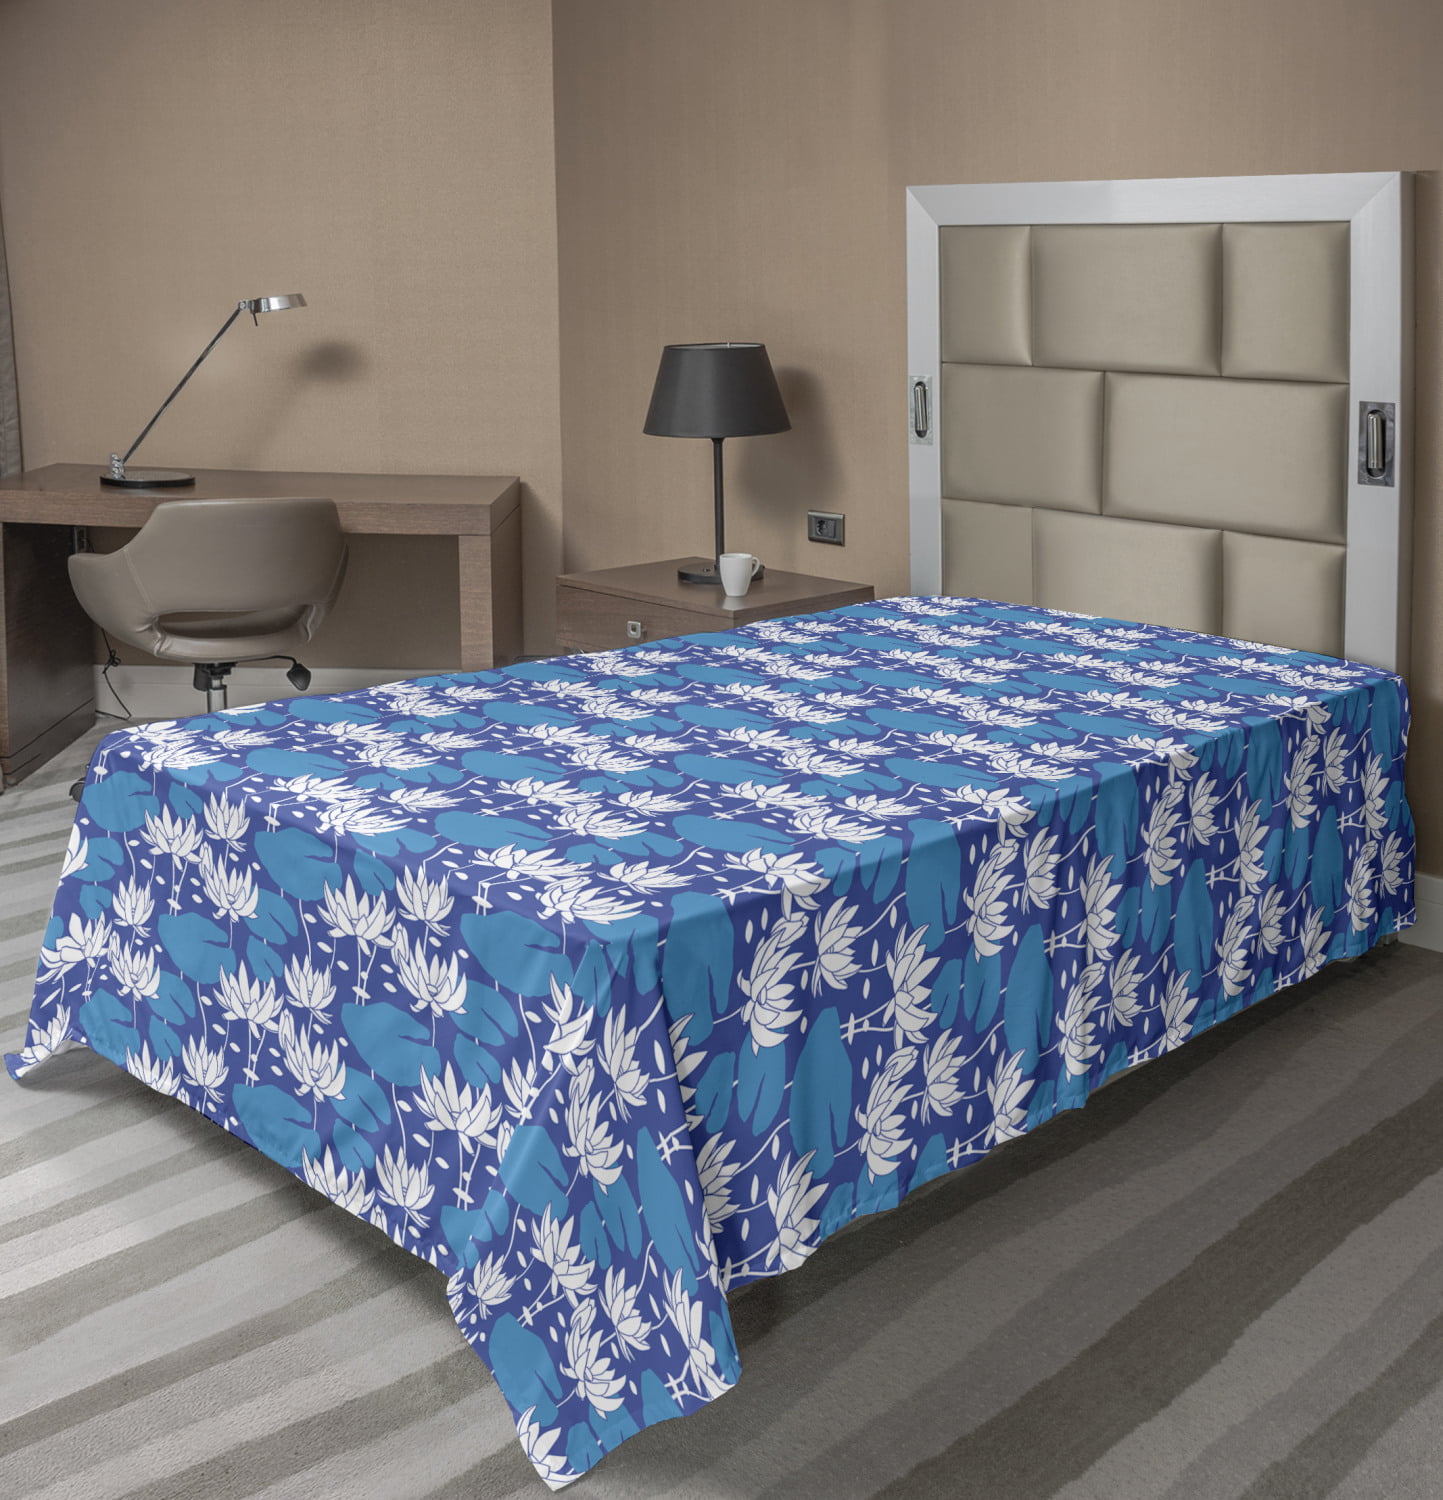 Ambesonne Aquatic Design Flat Sheet Top Sheet Decorative Bedding 6 Sizes 